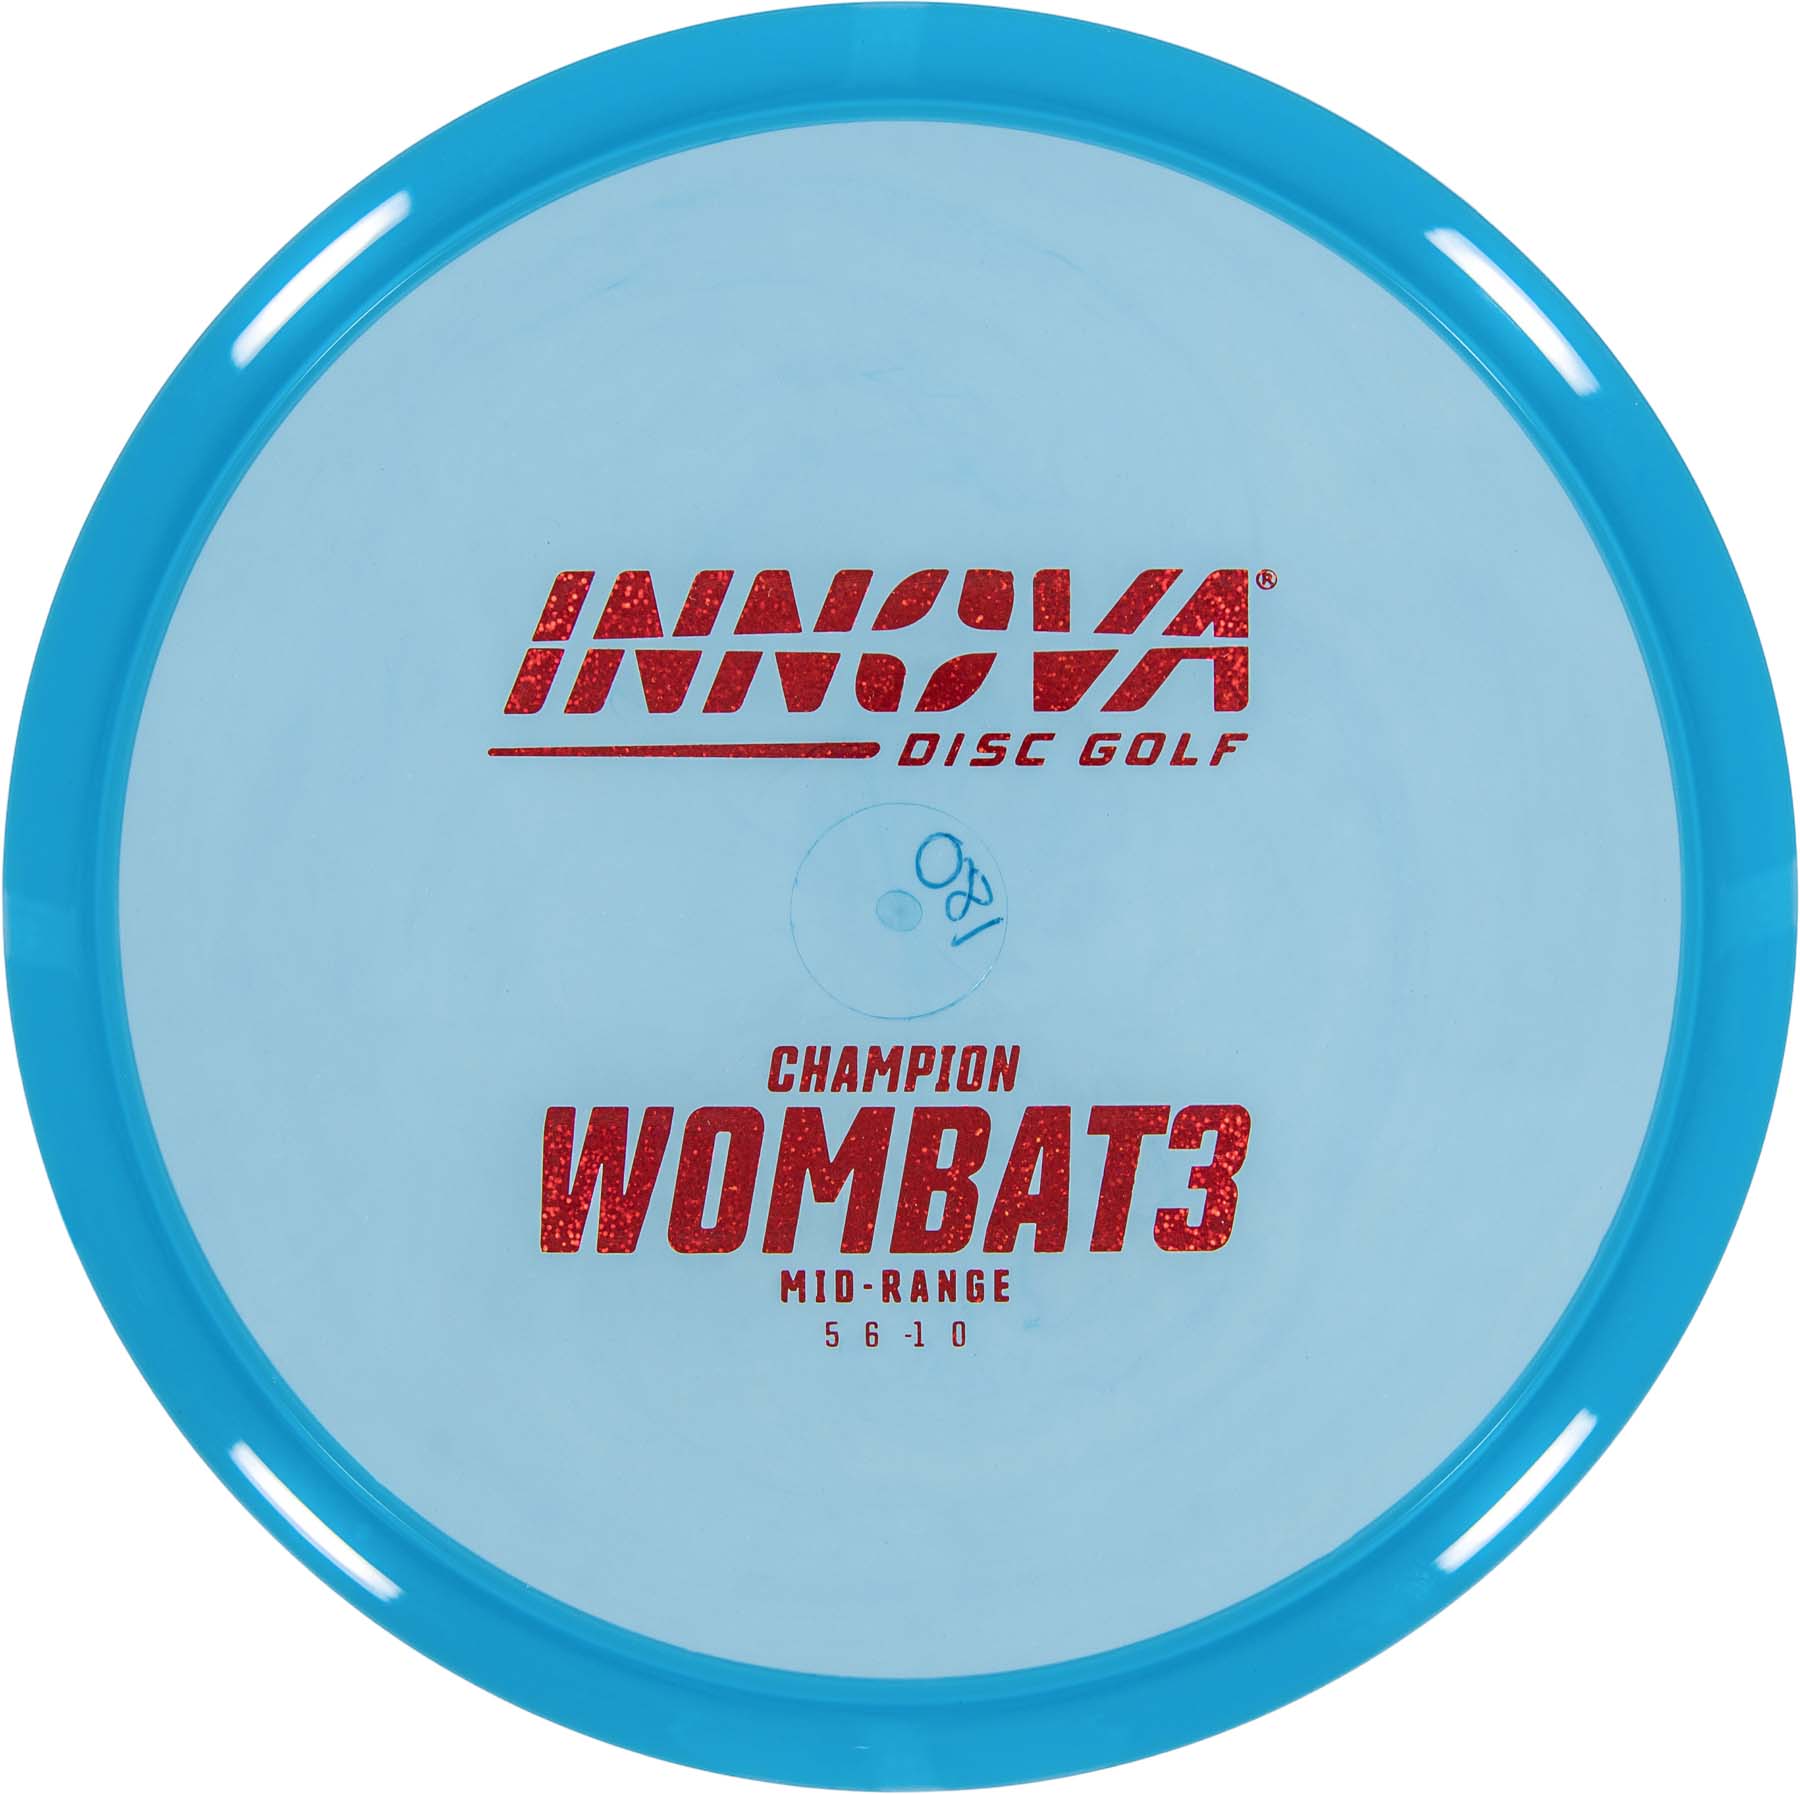 Innova Champion Wombat3 - Understable Mid Range Disc. Blue color.